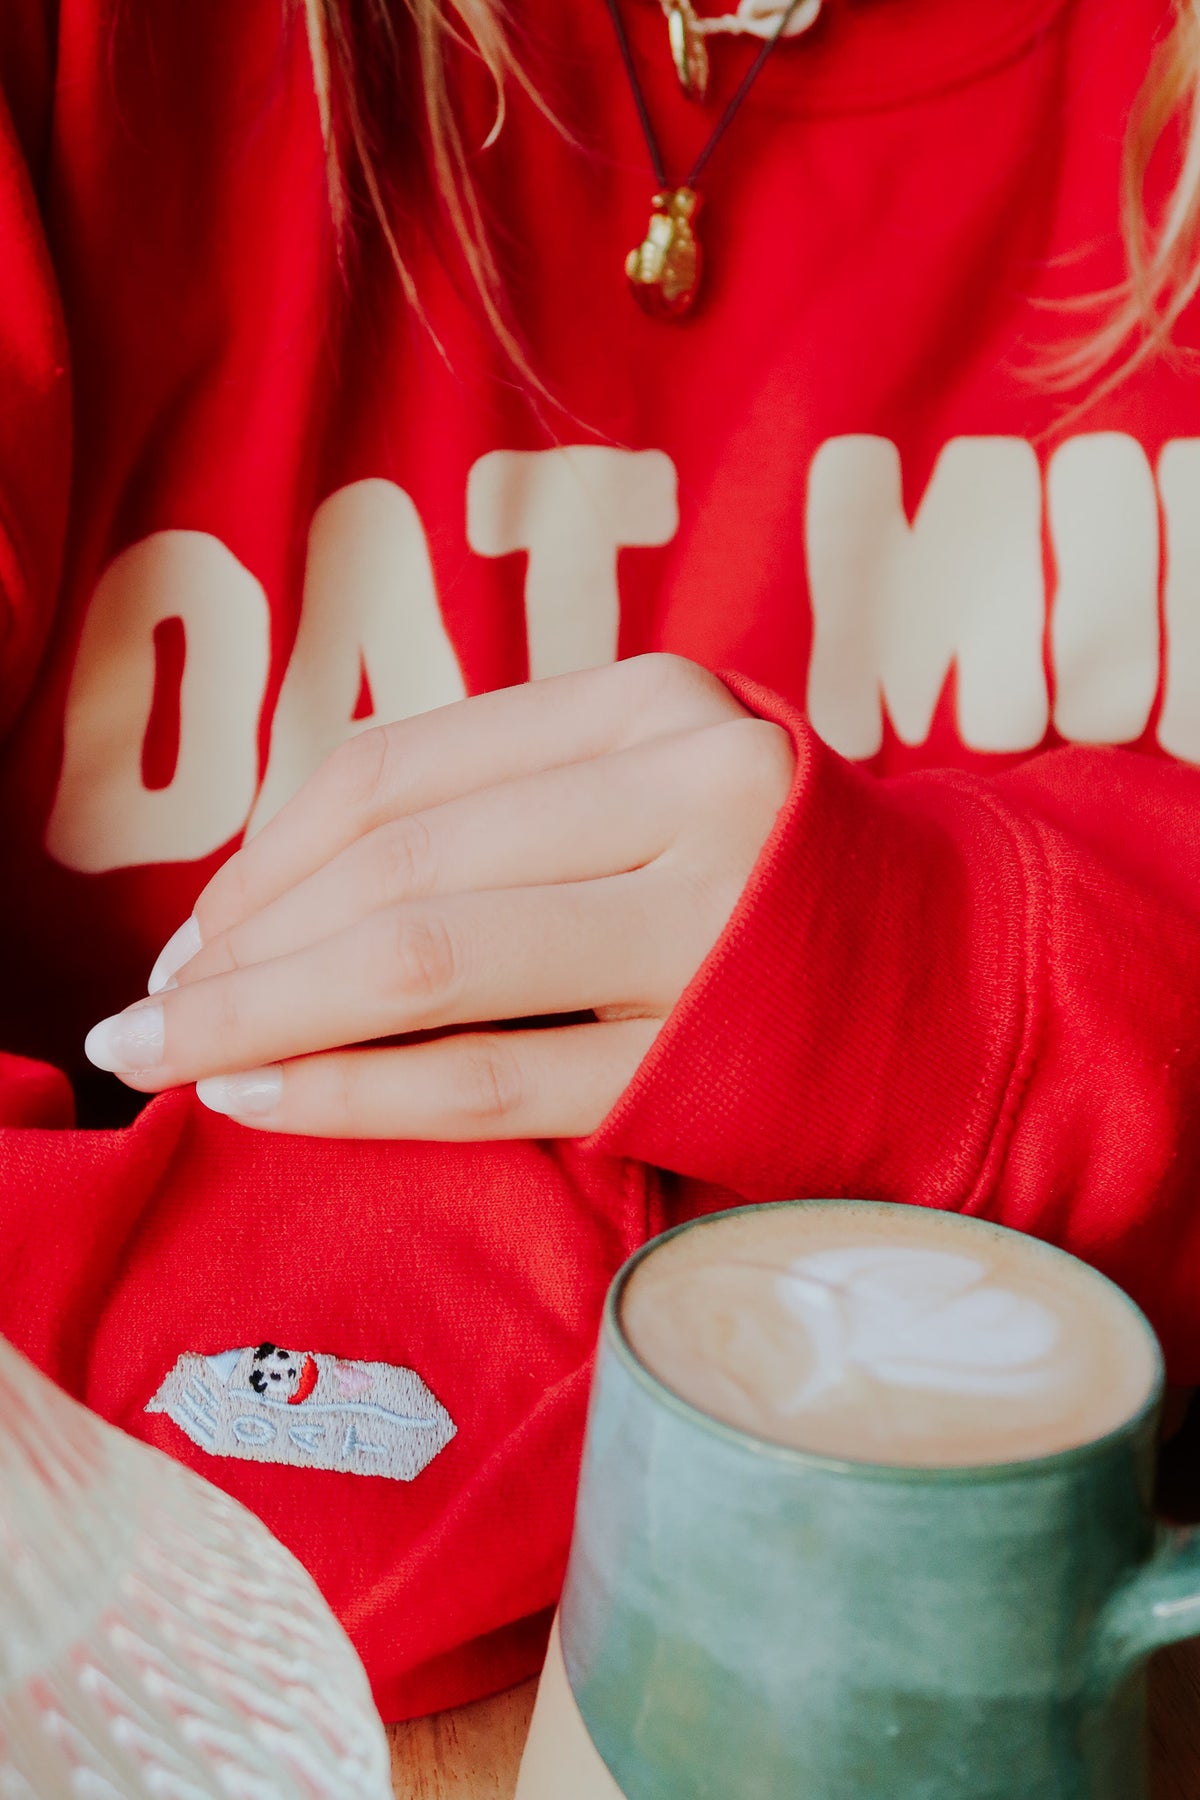 The Oat Milk Oversized Sweatshirt